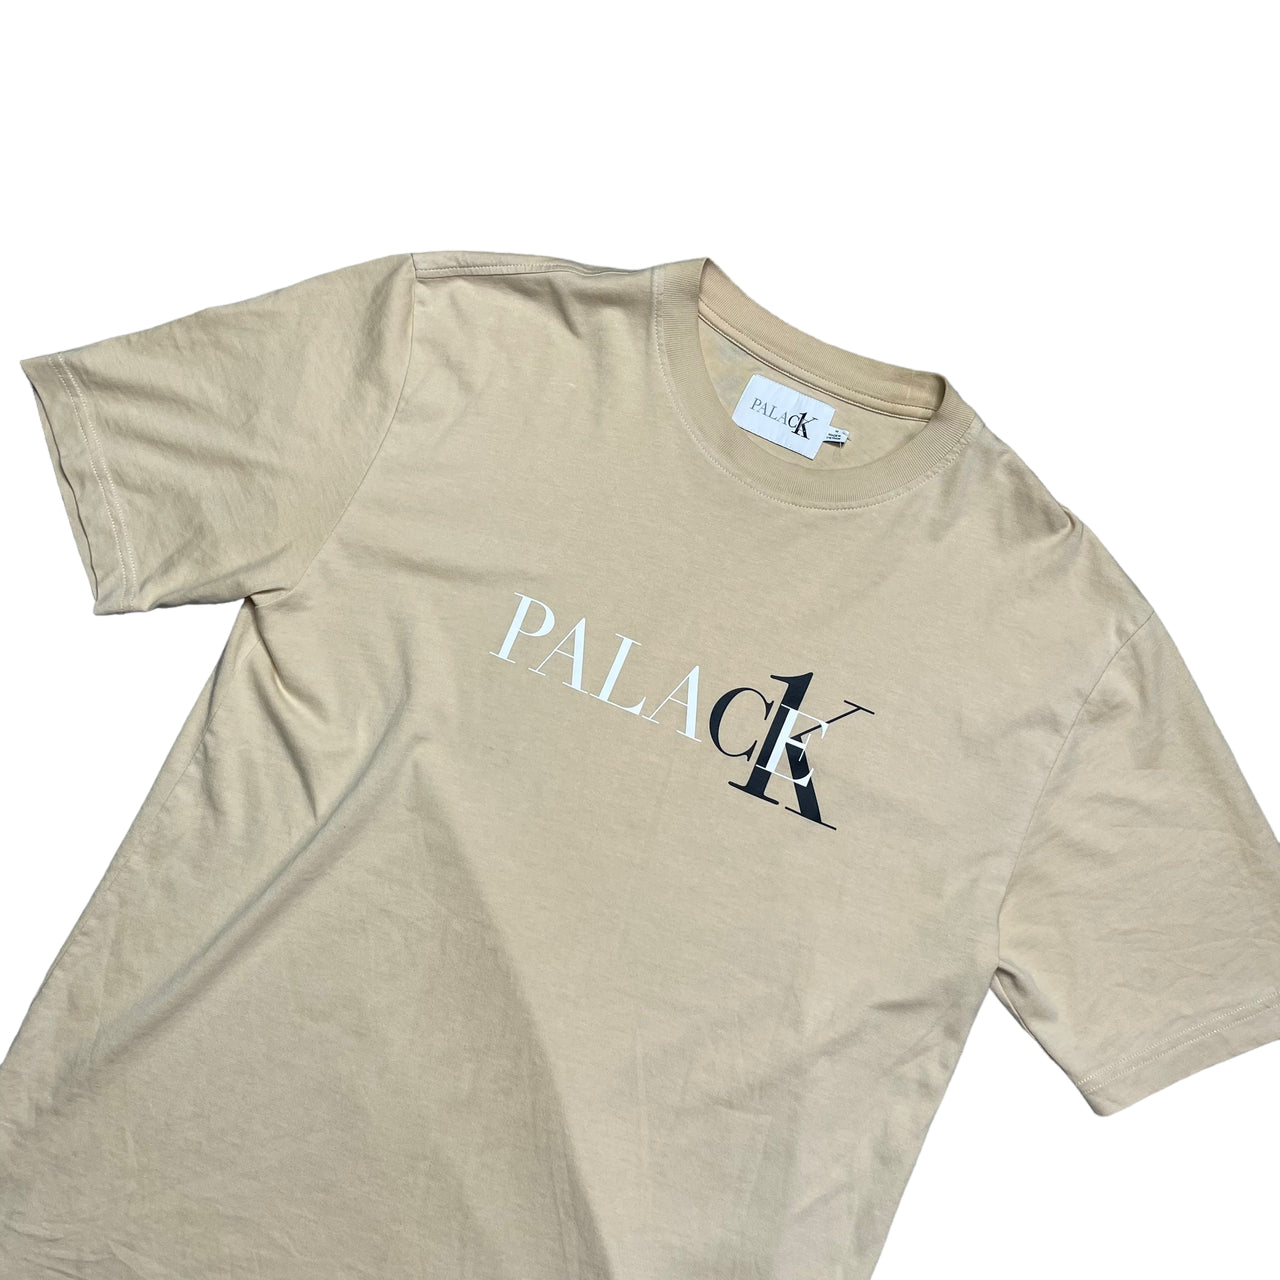 Palace x Calvin Klein T-Shirt